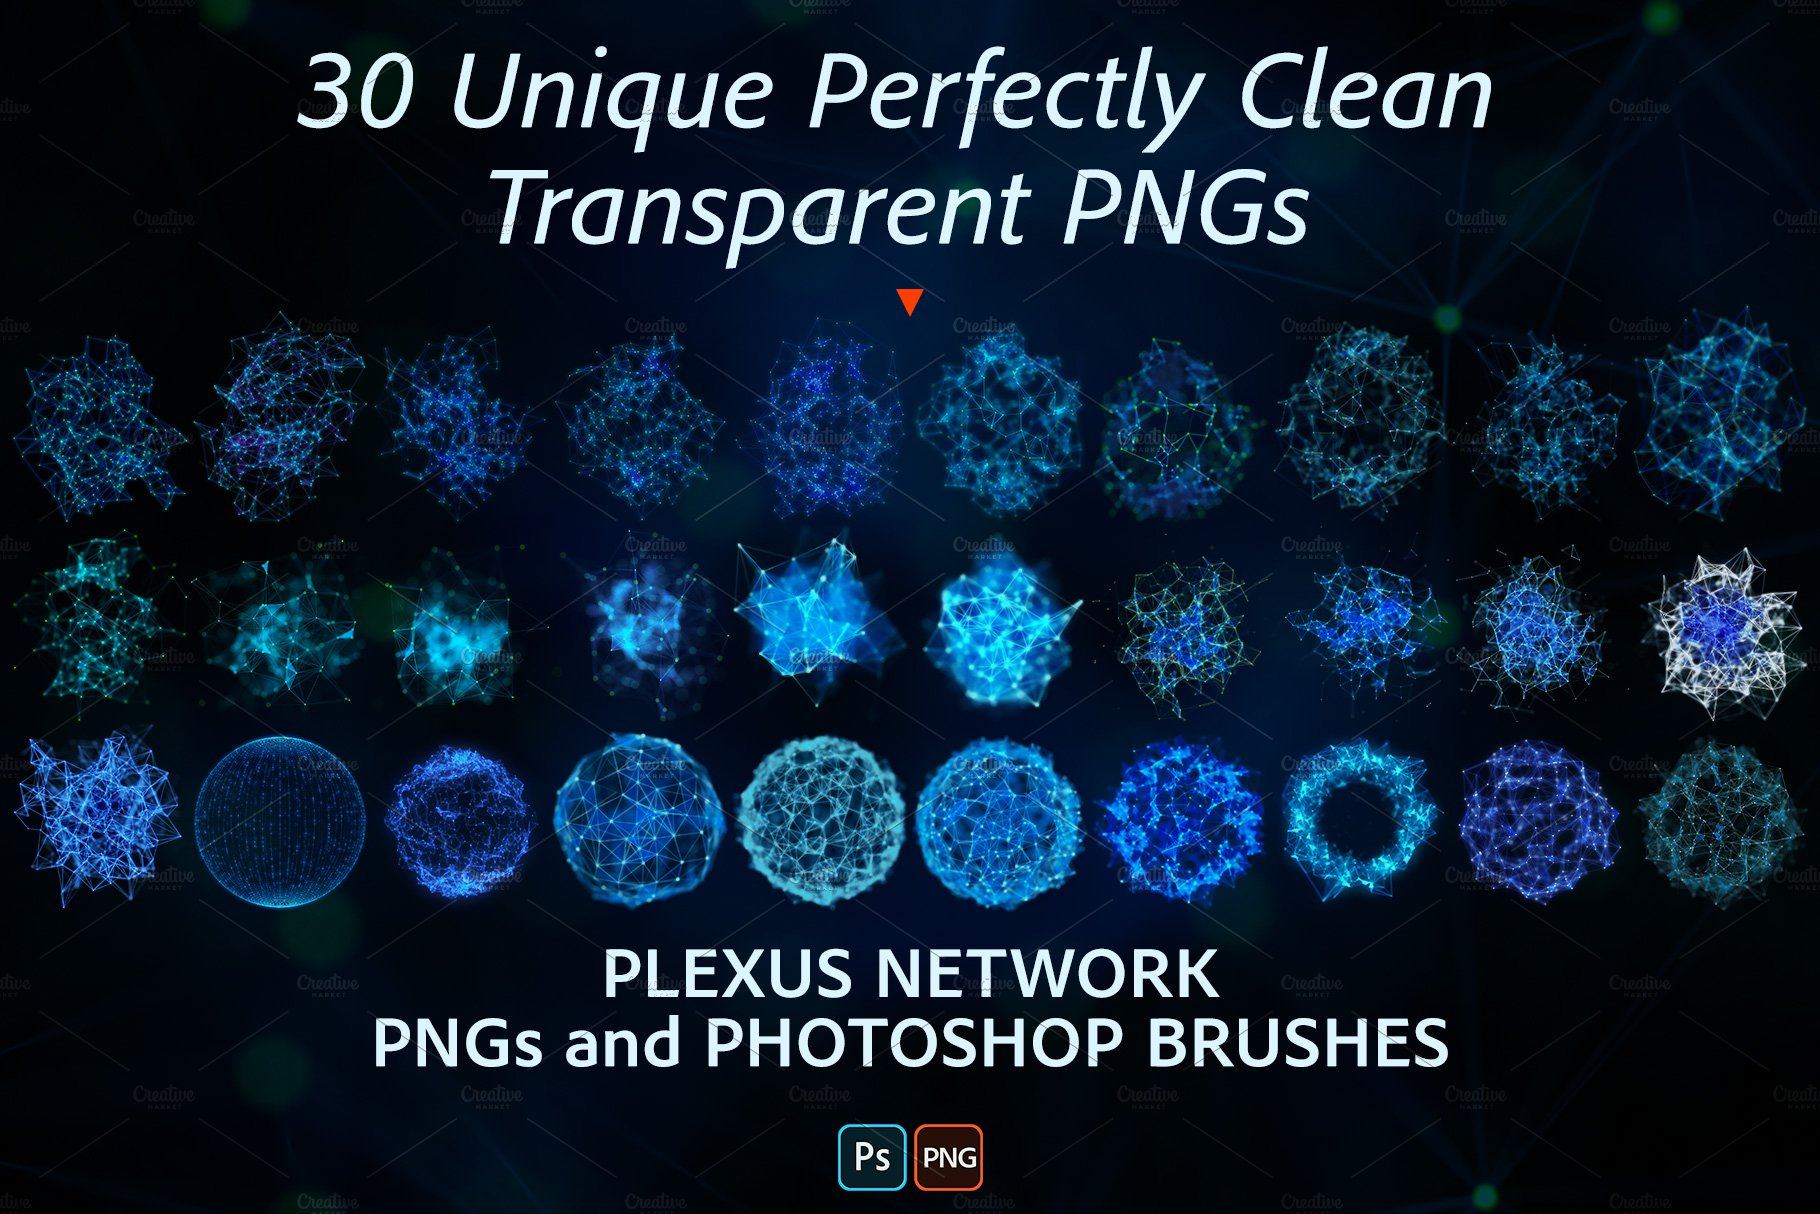 plexus network brushes for photoshop 04 920